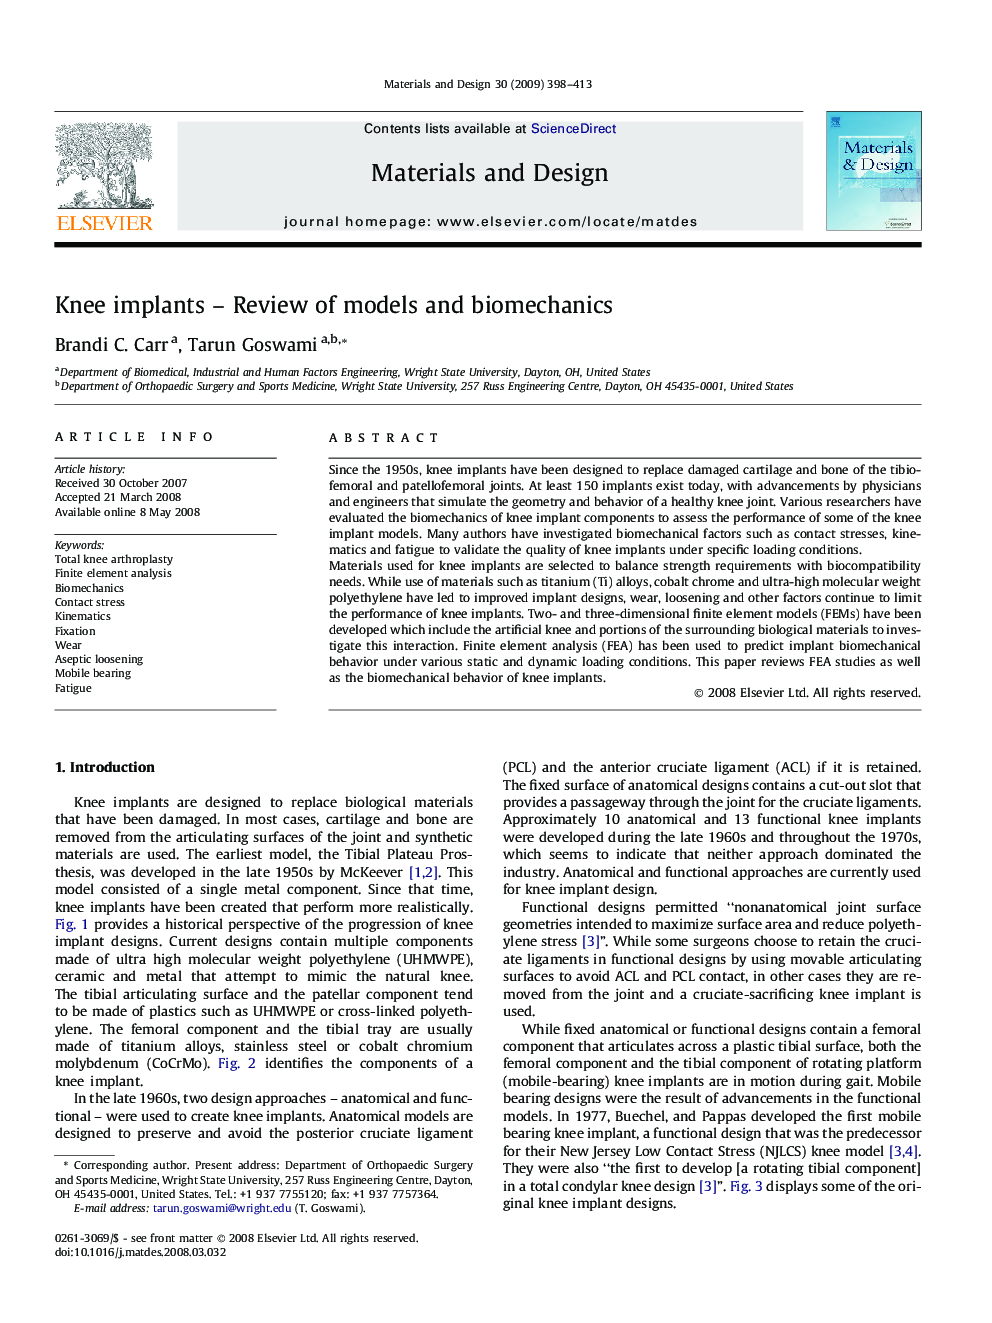 Knee implants – Review of models and biomechanics